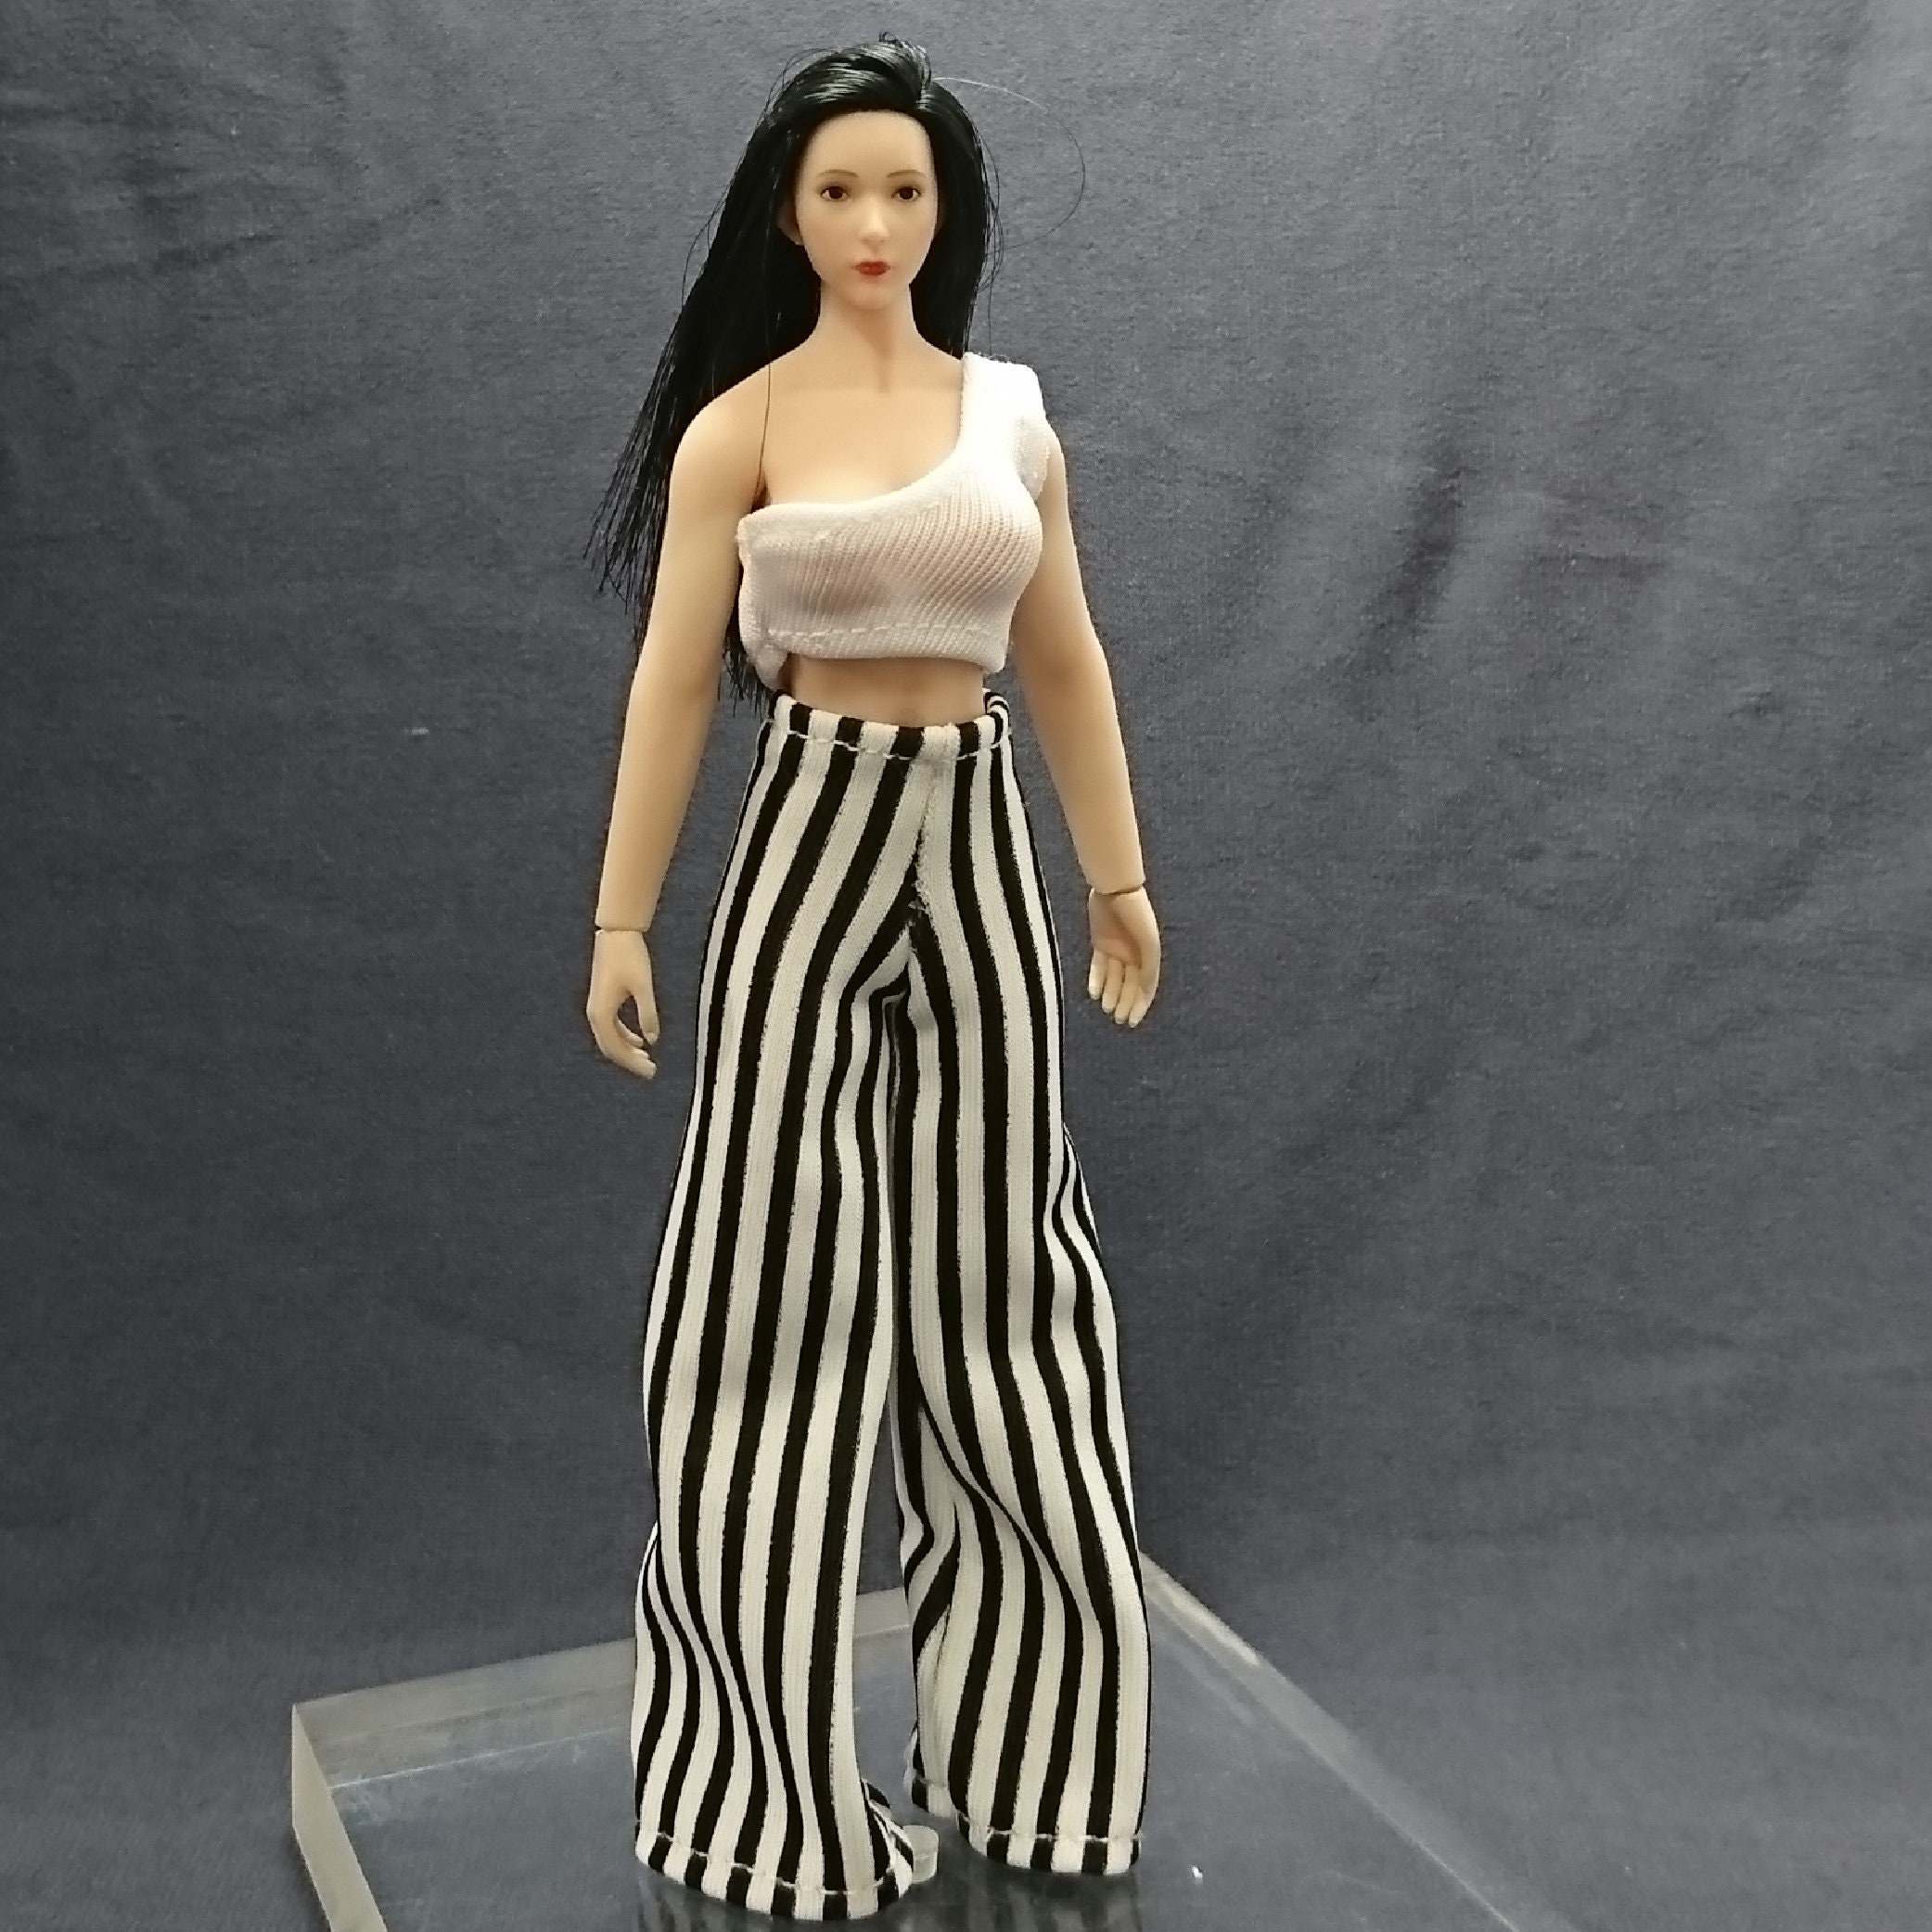 CLOTHING: TB League (aka Phicen) 1/12 Scale Super Flexible Female